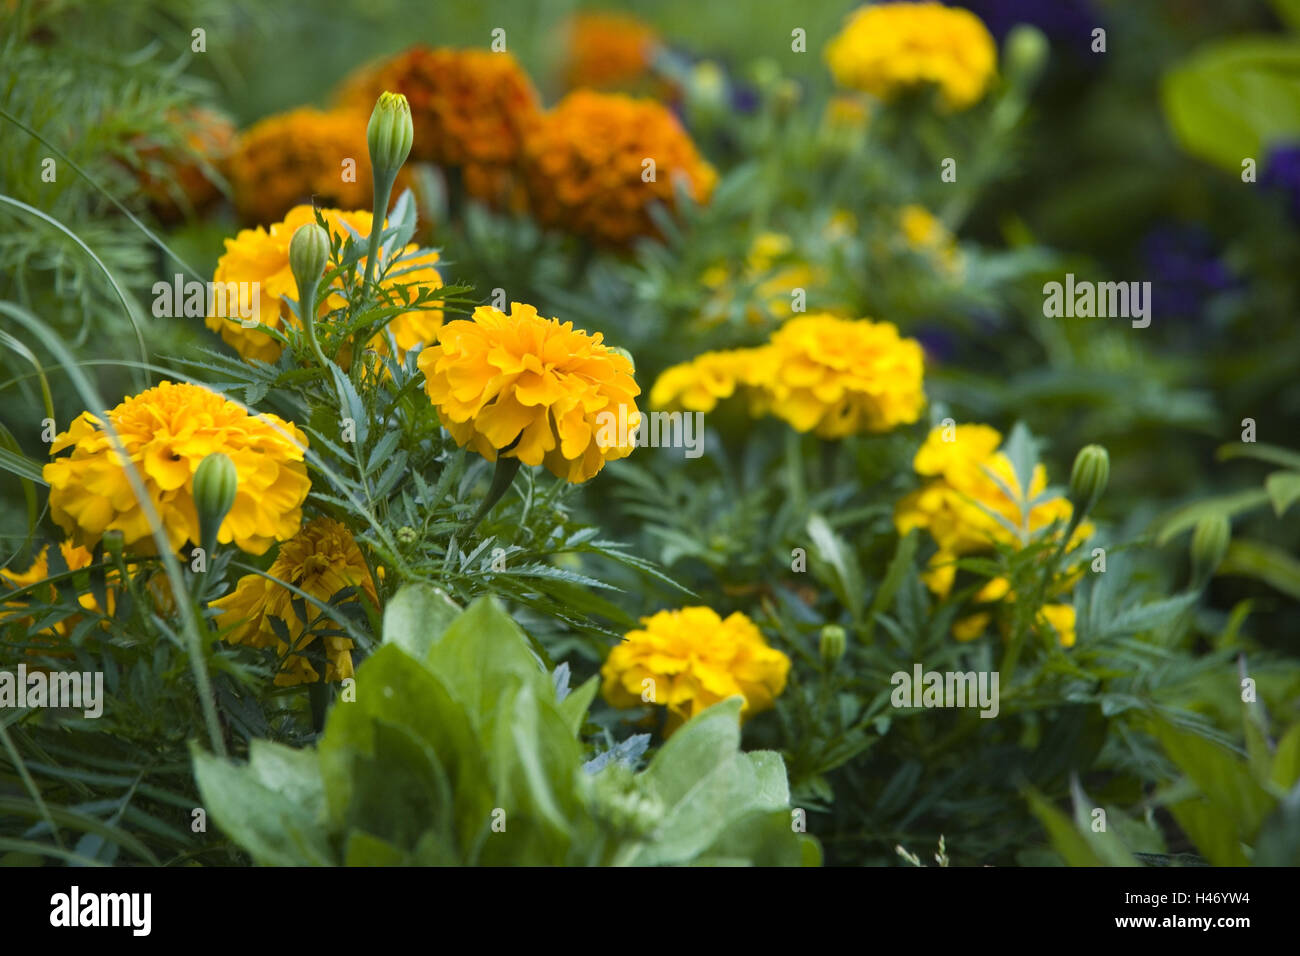 French marigold, Stock Photo